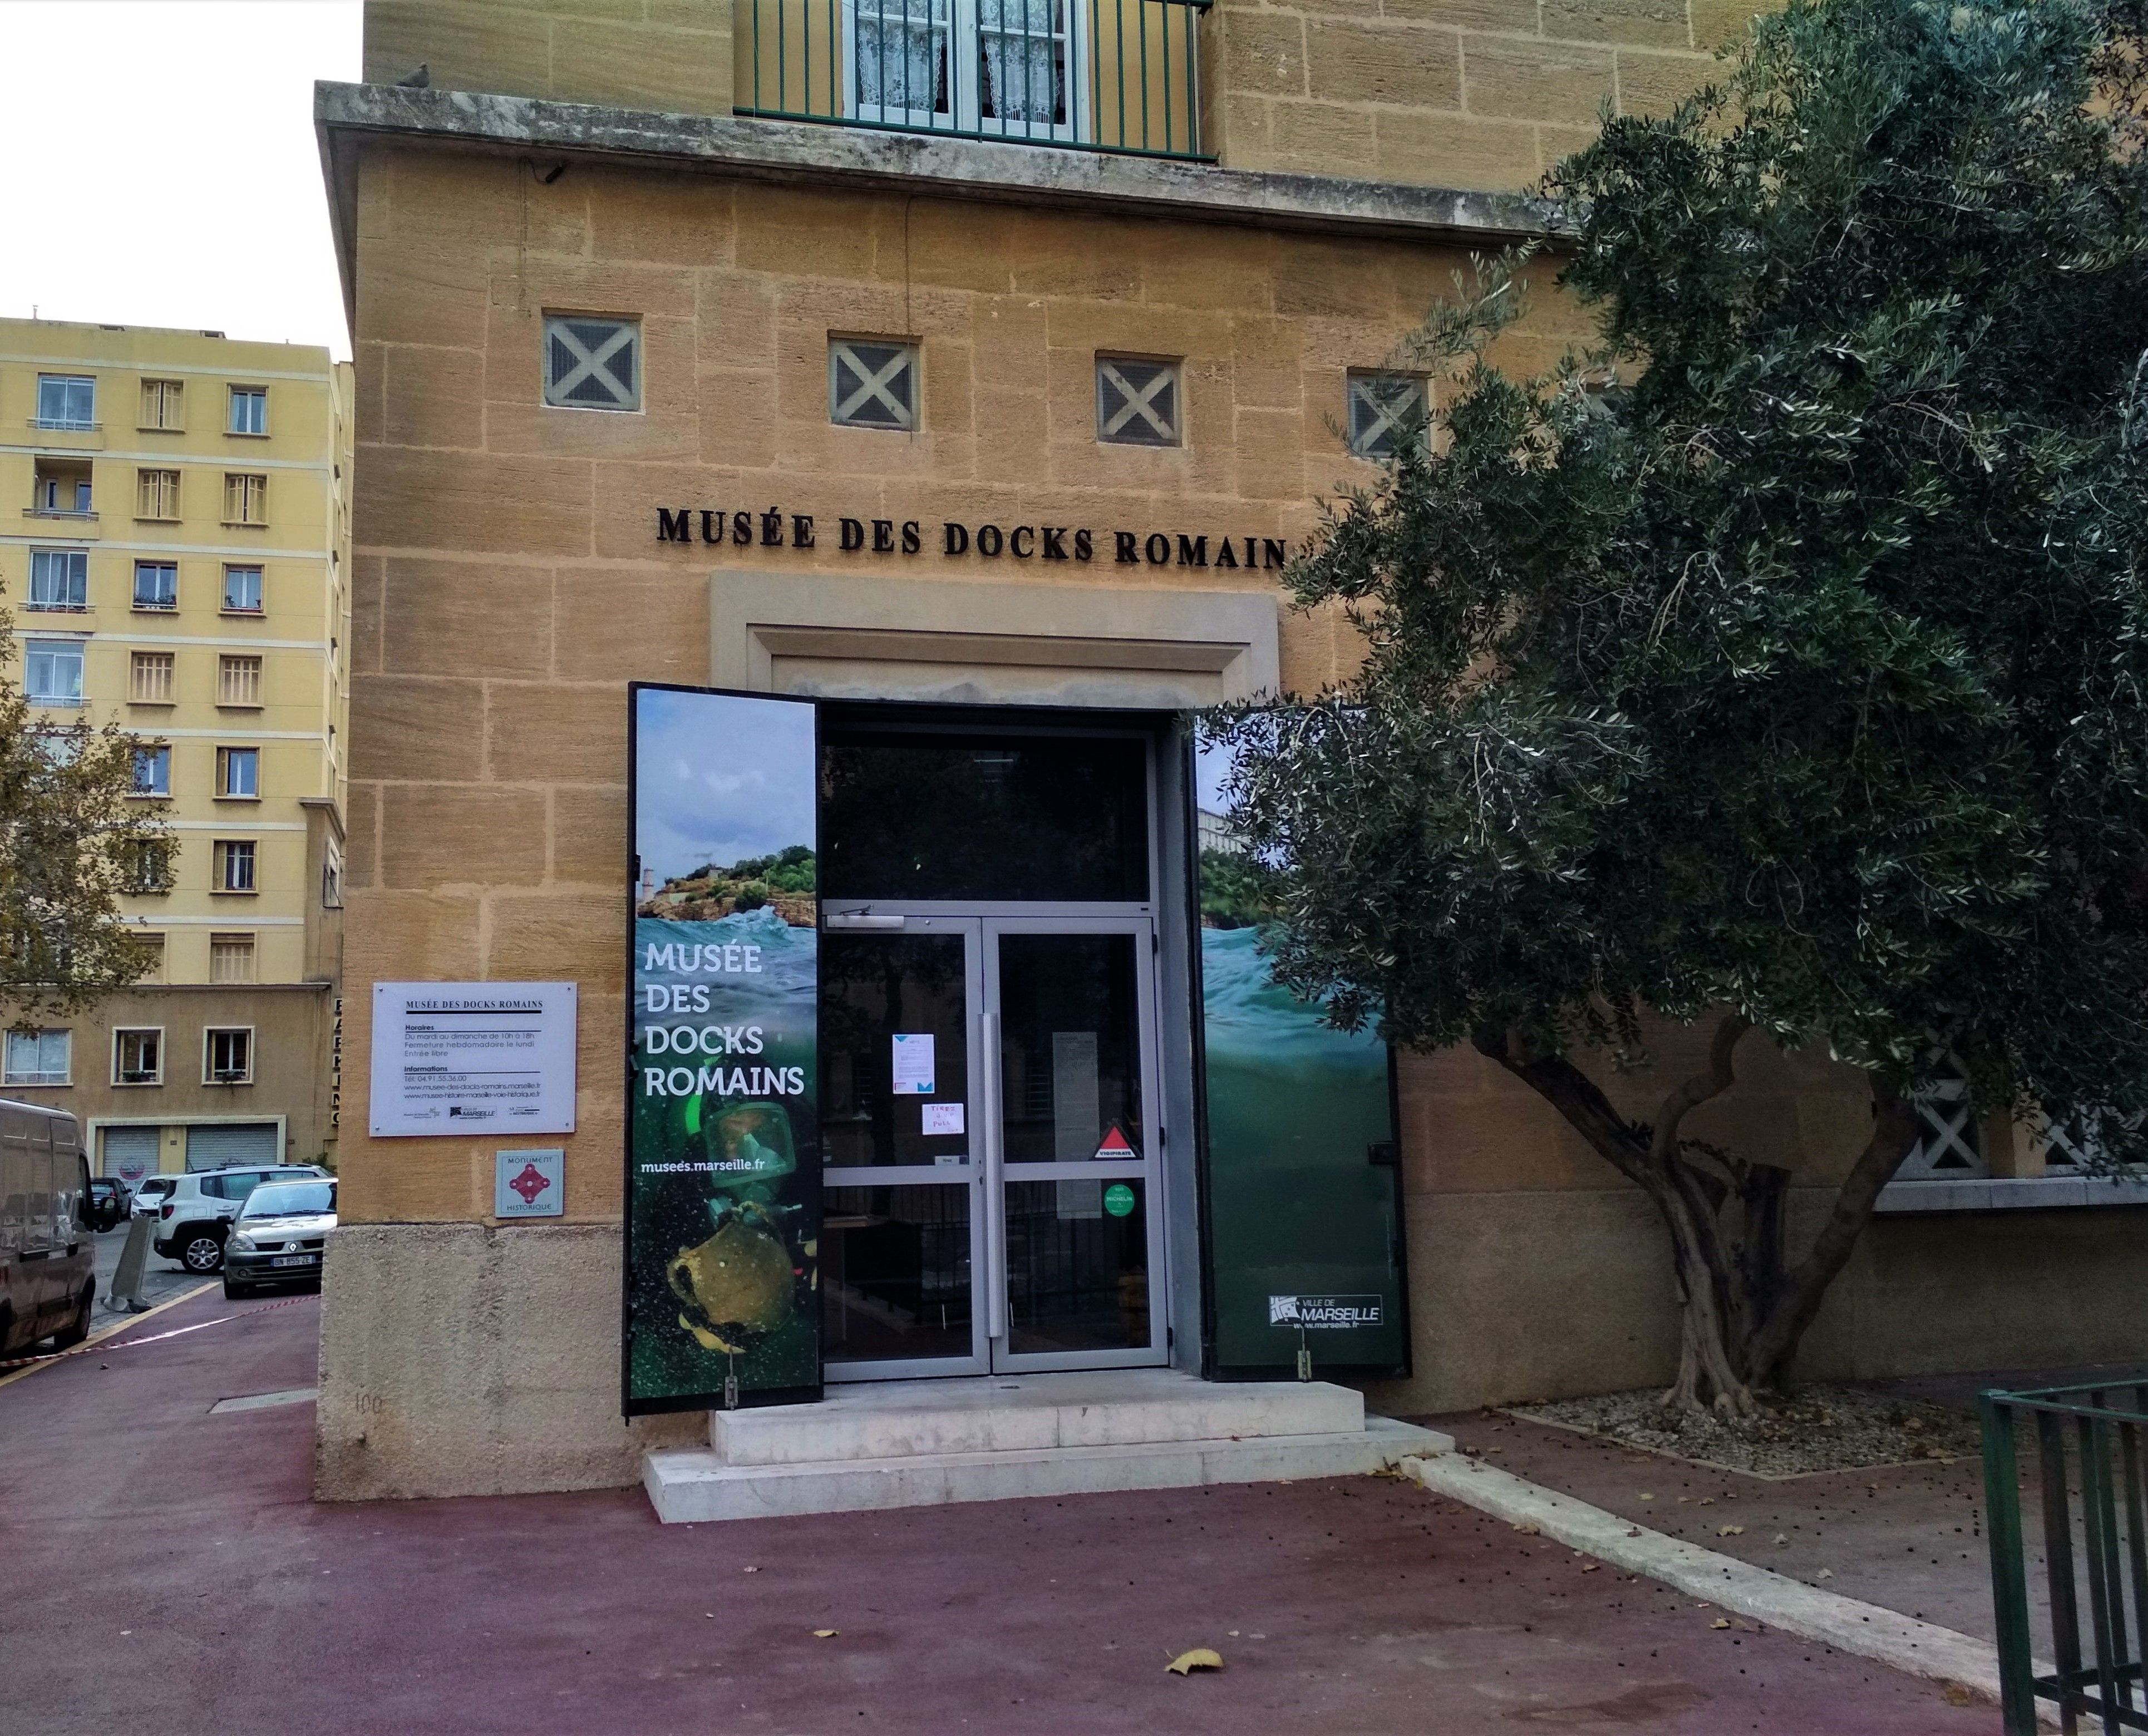 Musée des Docks Romains, Marseille: All Year